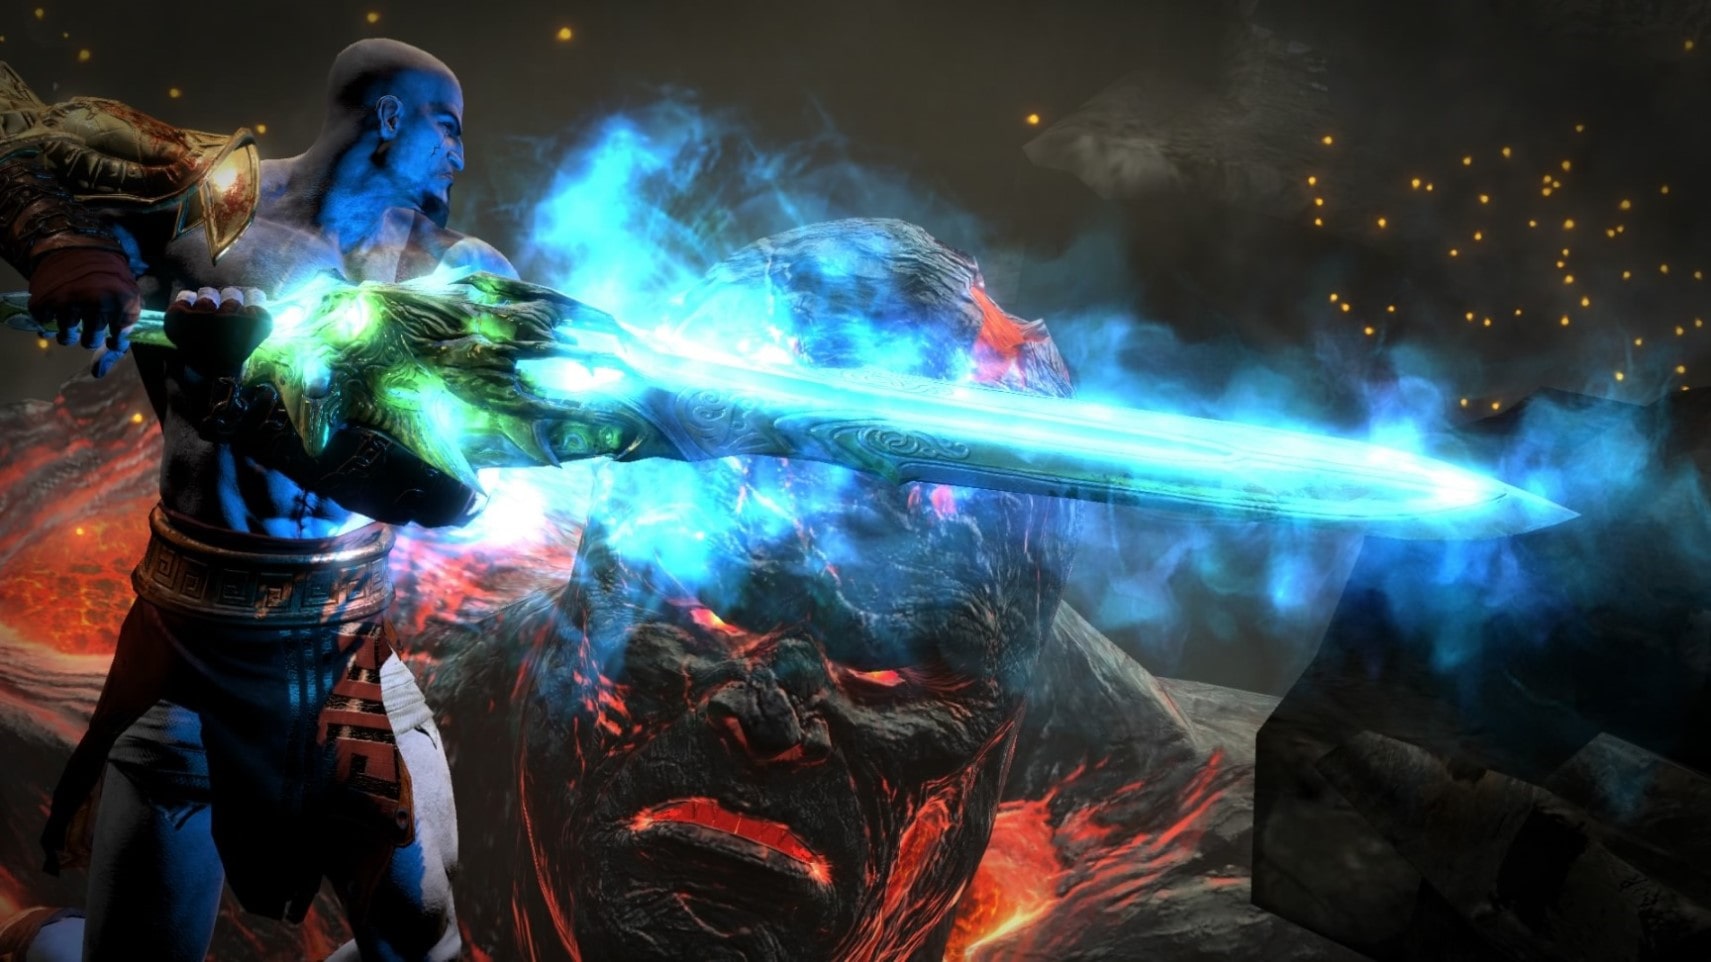 God Of War 3' Gets Glorious 8K Remaster